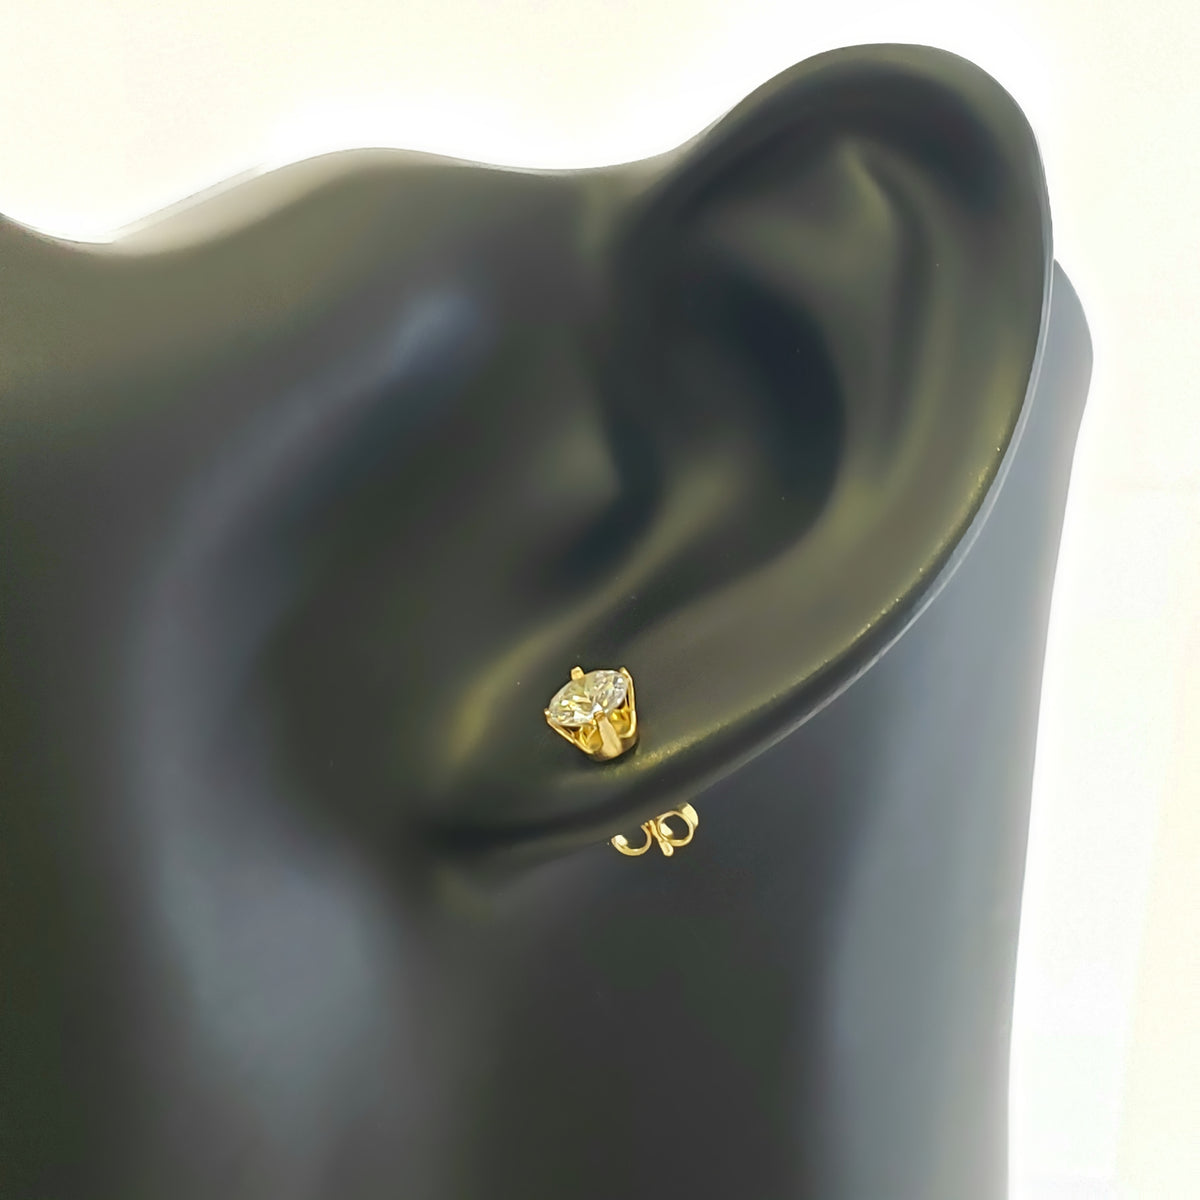 10K Yellow Gold Cubic Zirconia Stud Earrings - 5mm